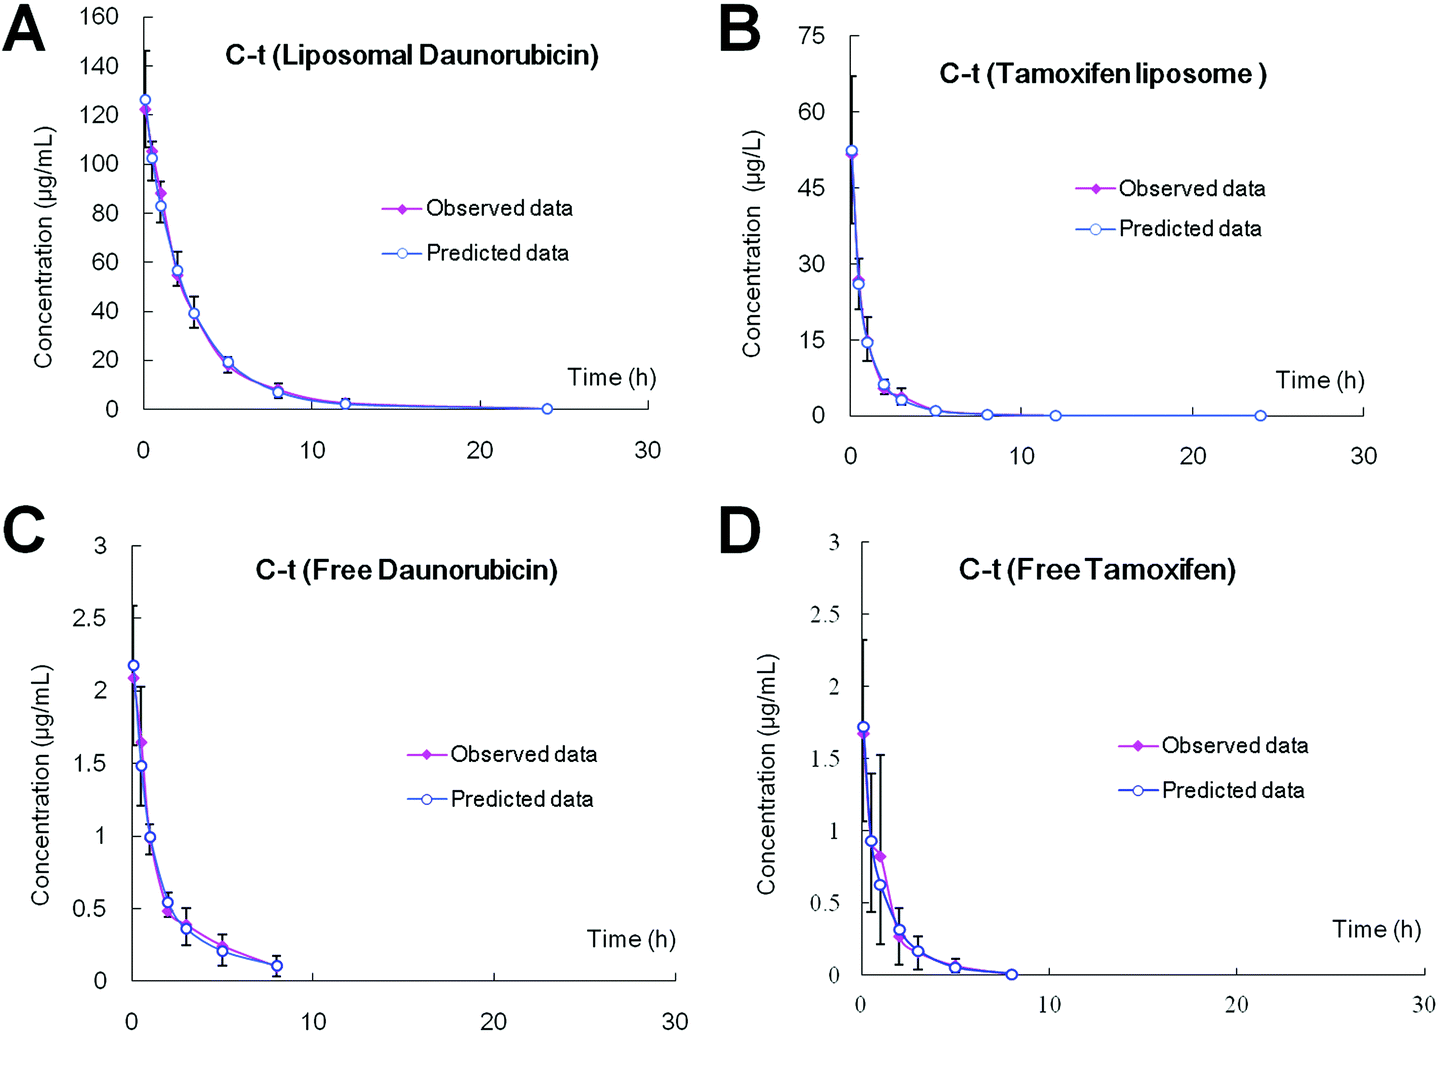 Tamoxifen embedded in lipid bilayer improves the oncotarget of liposomal daunorubicin in vivo